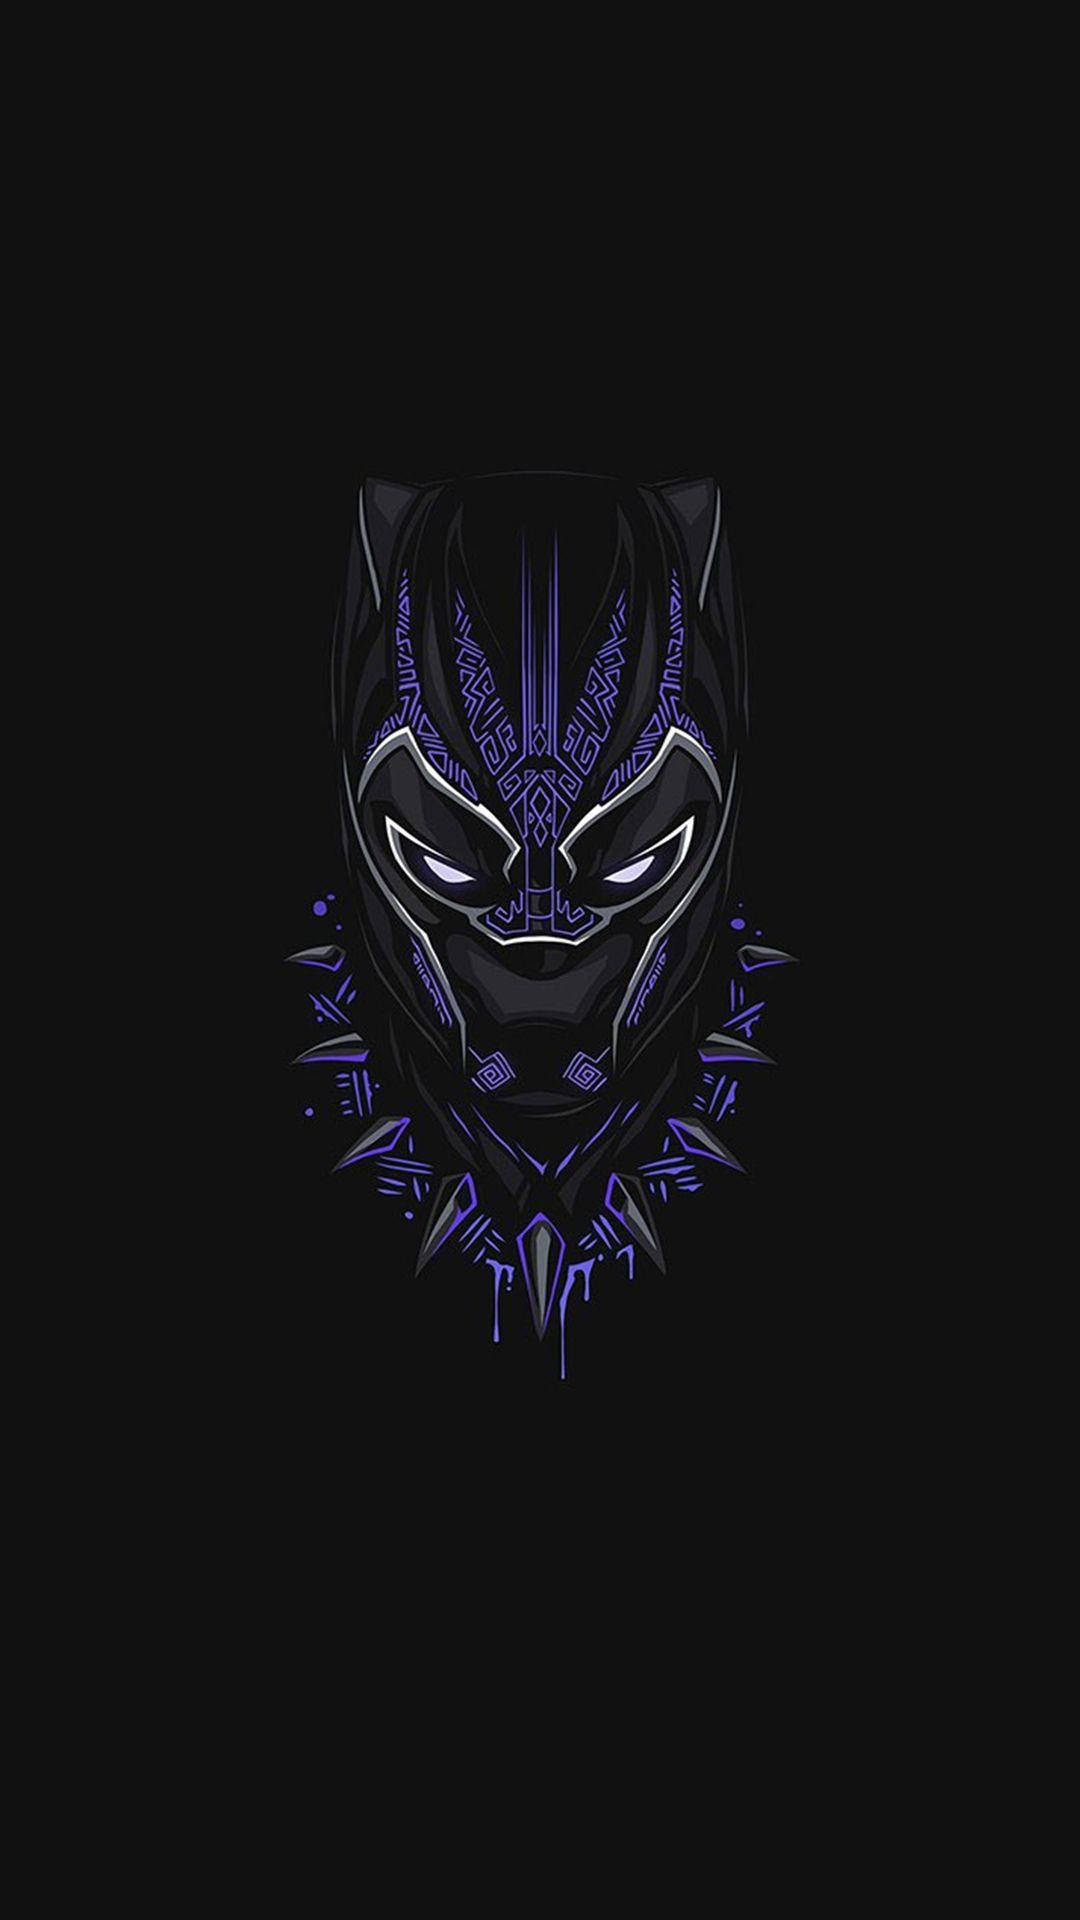 Black Panther Superhero Mask Vector Art Background